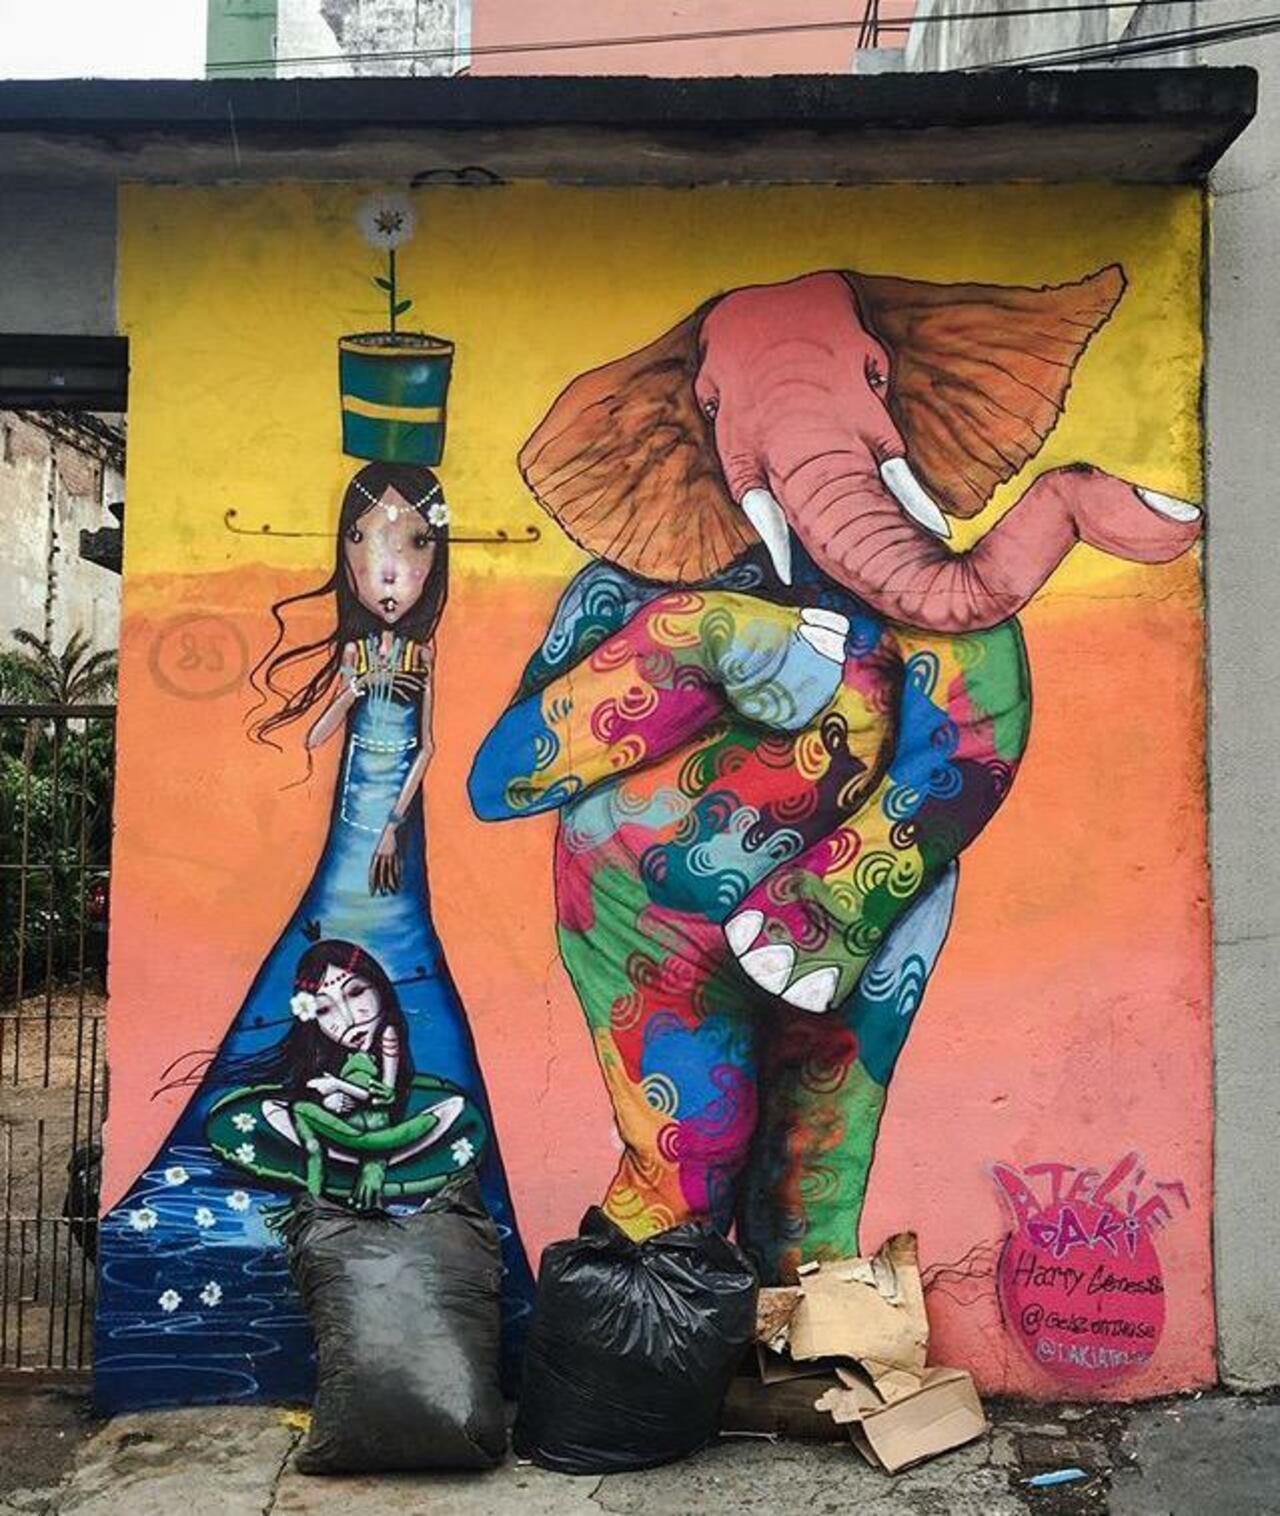 Street Art by Harry Geneis & Gelson in São Paulo #art #mural #graffiti #streetart http://t.co/SlLbhuMZfD … … …… … http://twitter.com/charlesjackso14/status/648021533751906304